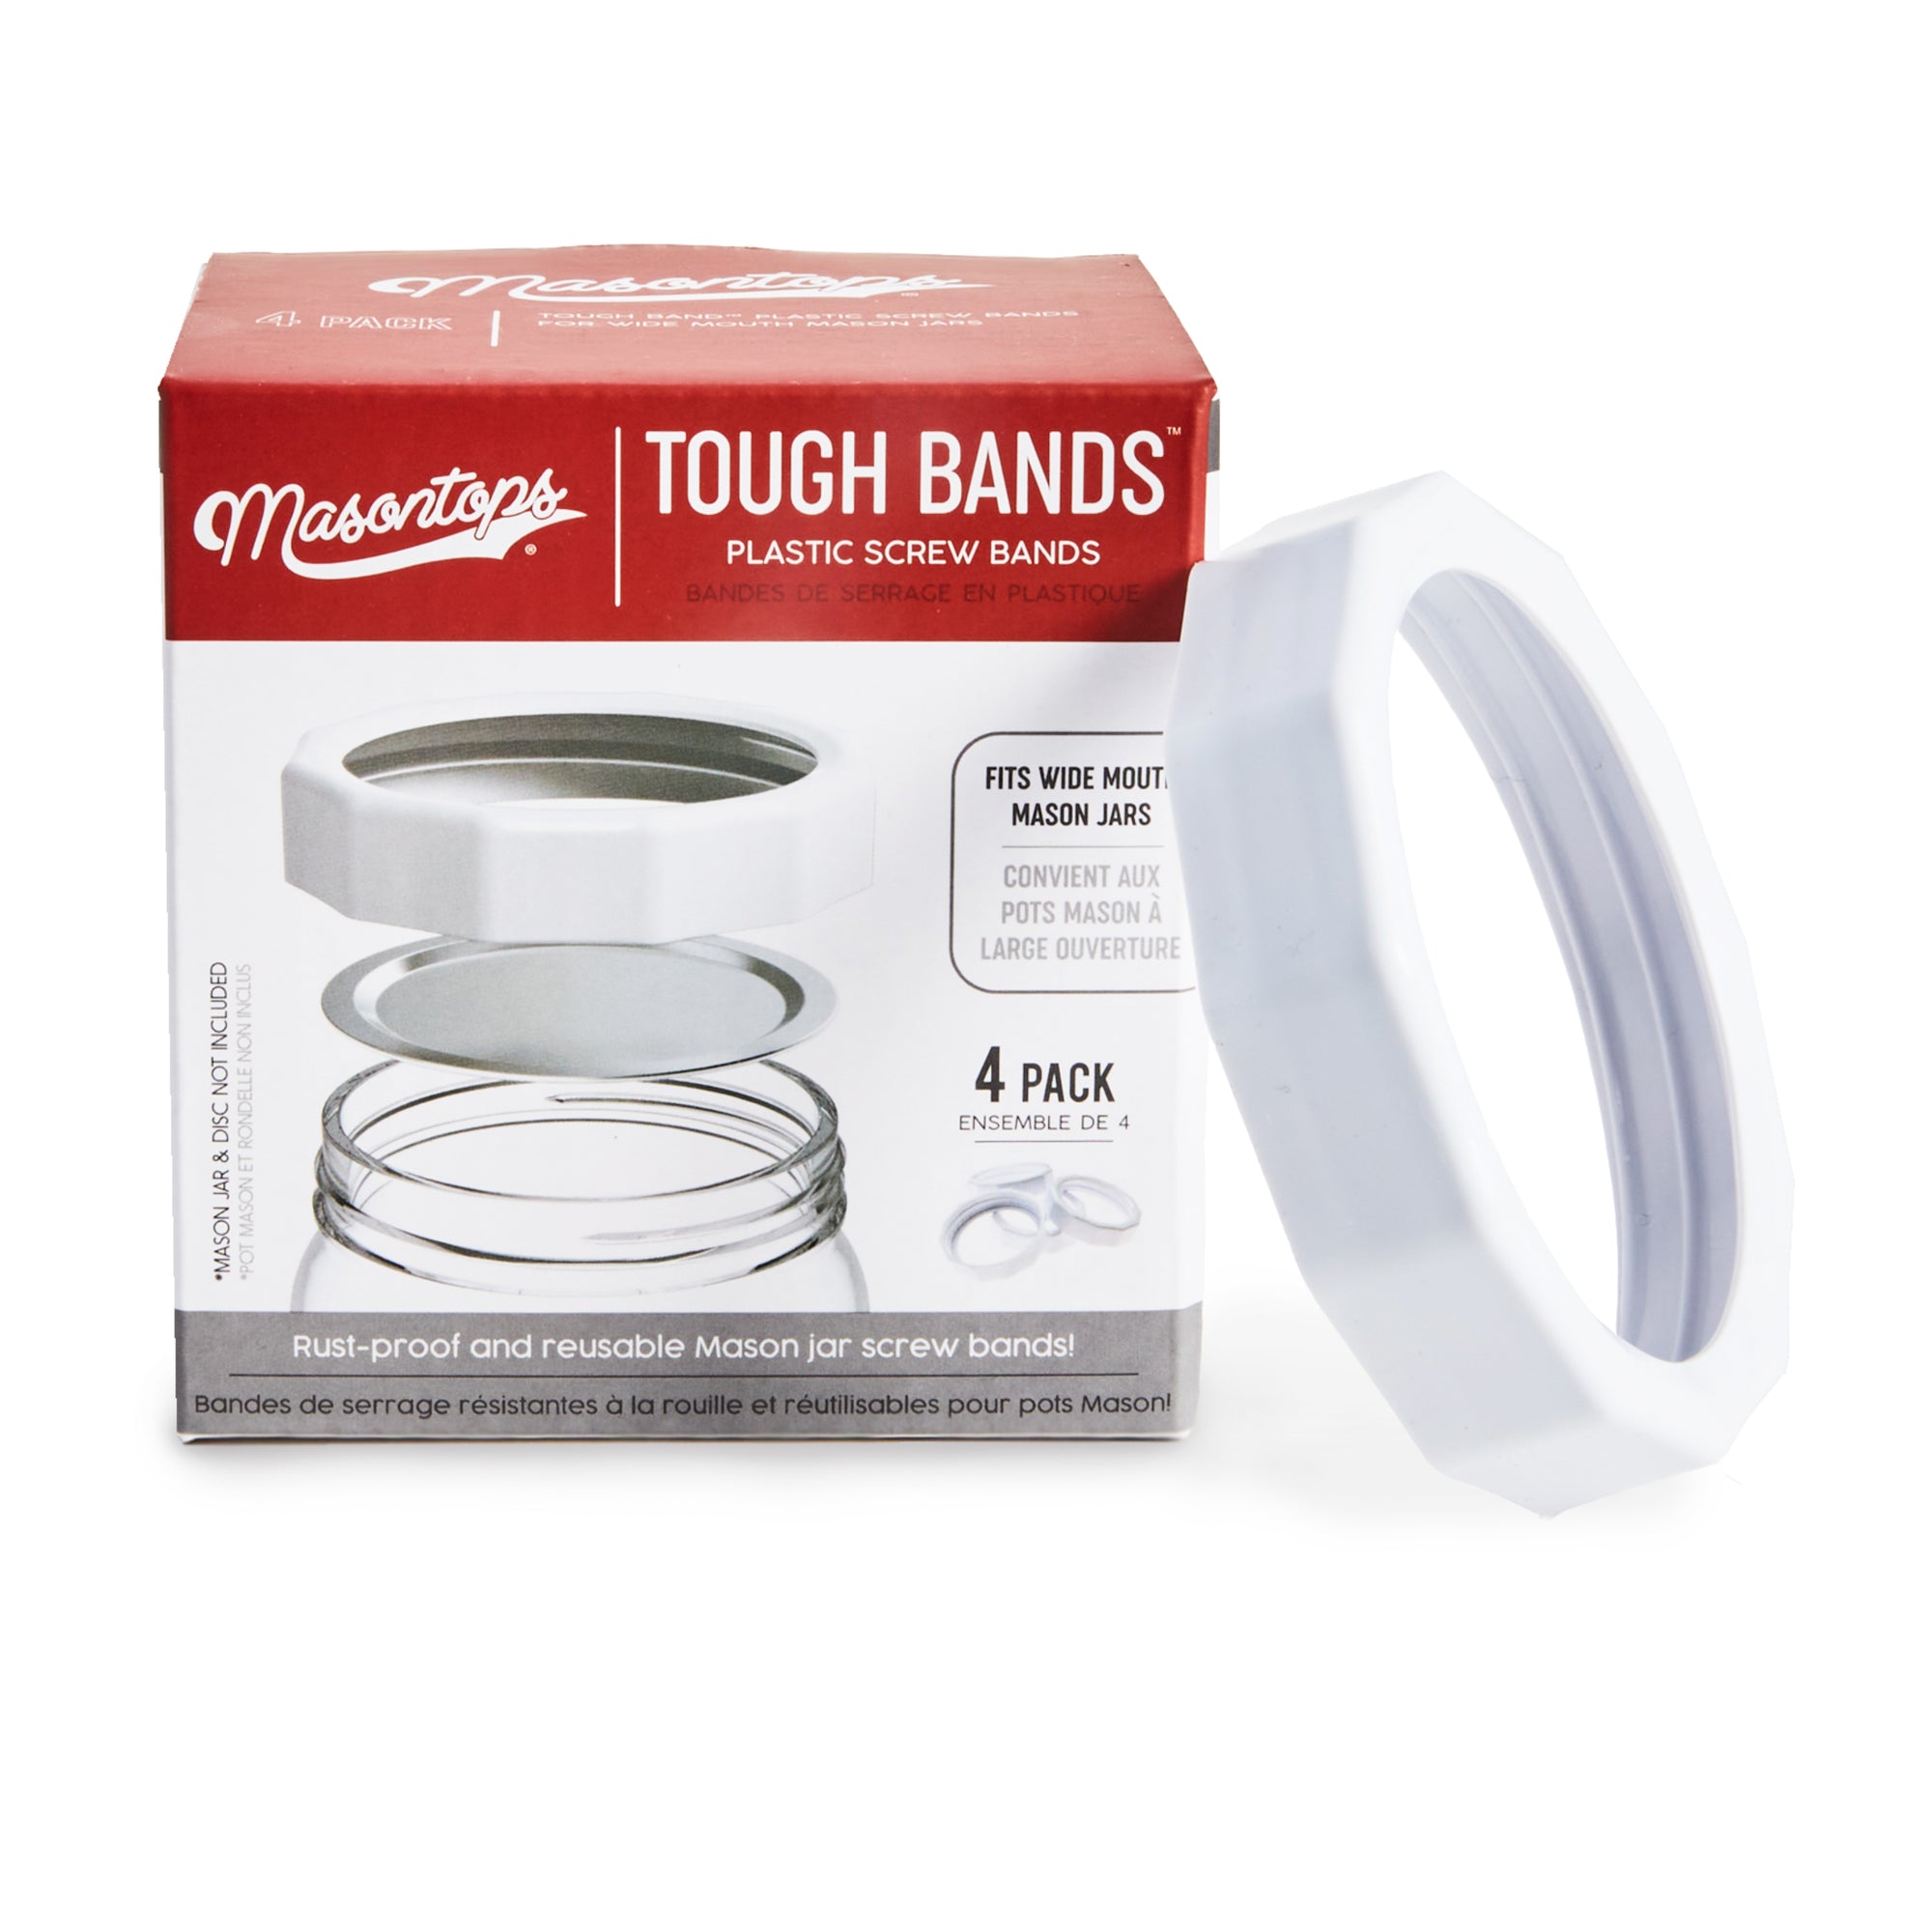 tough band and tough band box on a white background